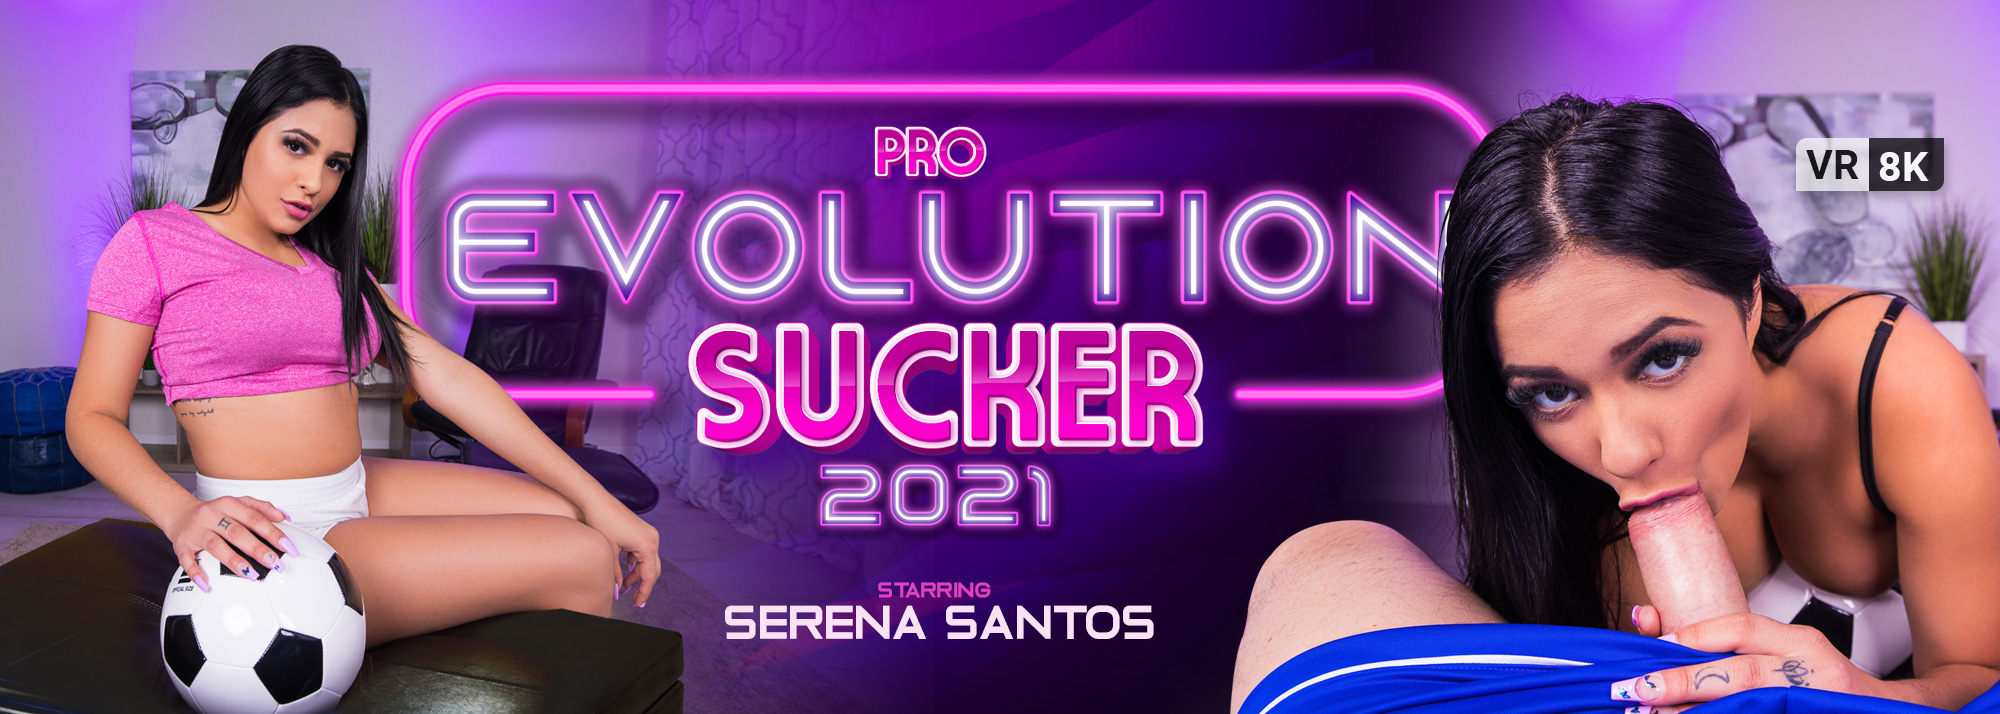 Pro Evolution Sucker 2021 - VR Porn Video, Starring Serena Santos